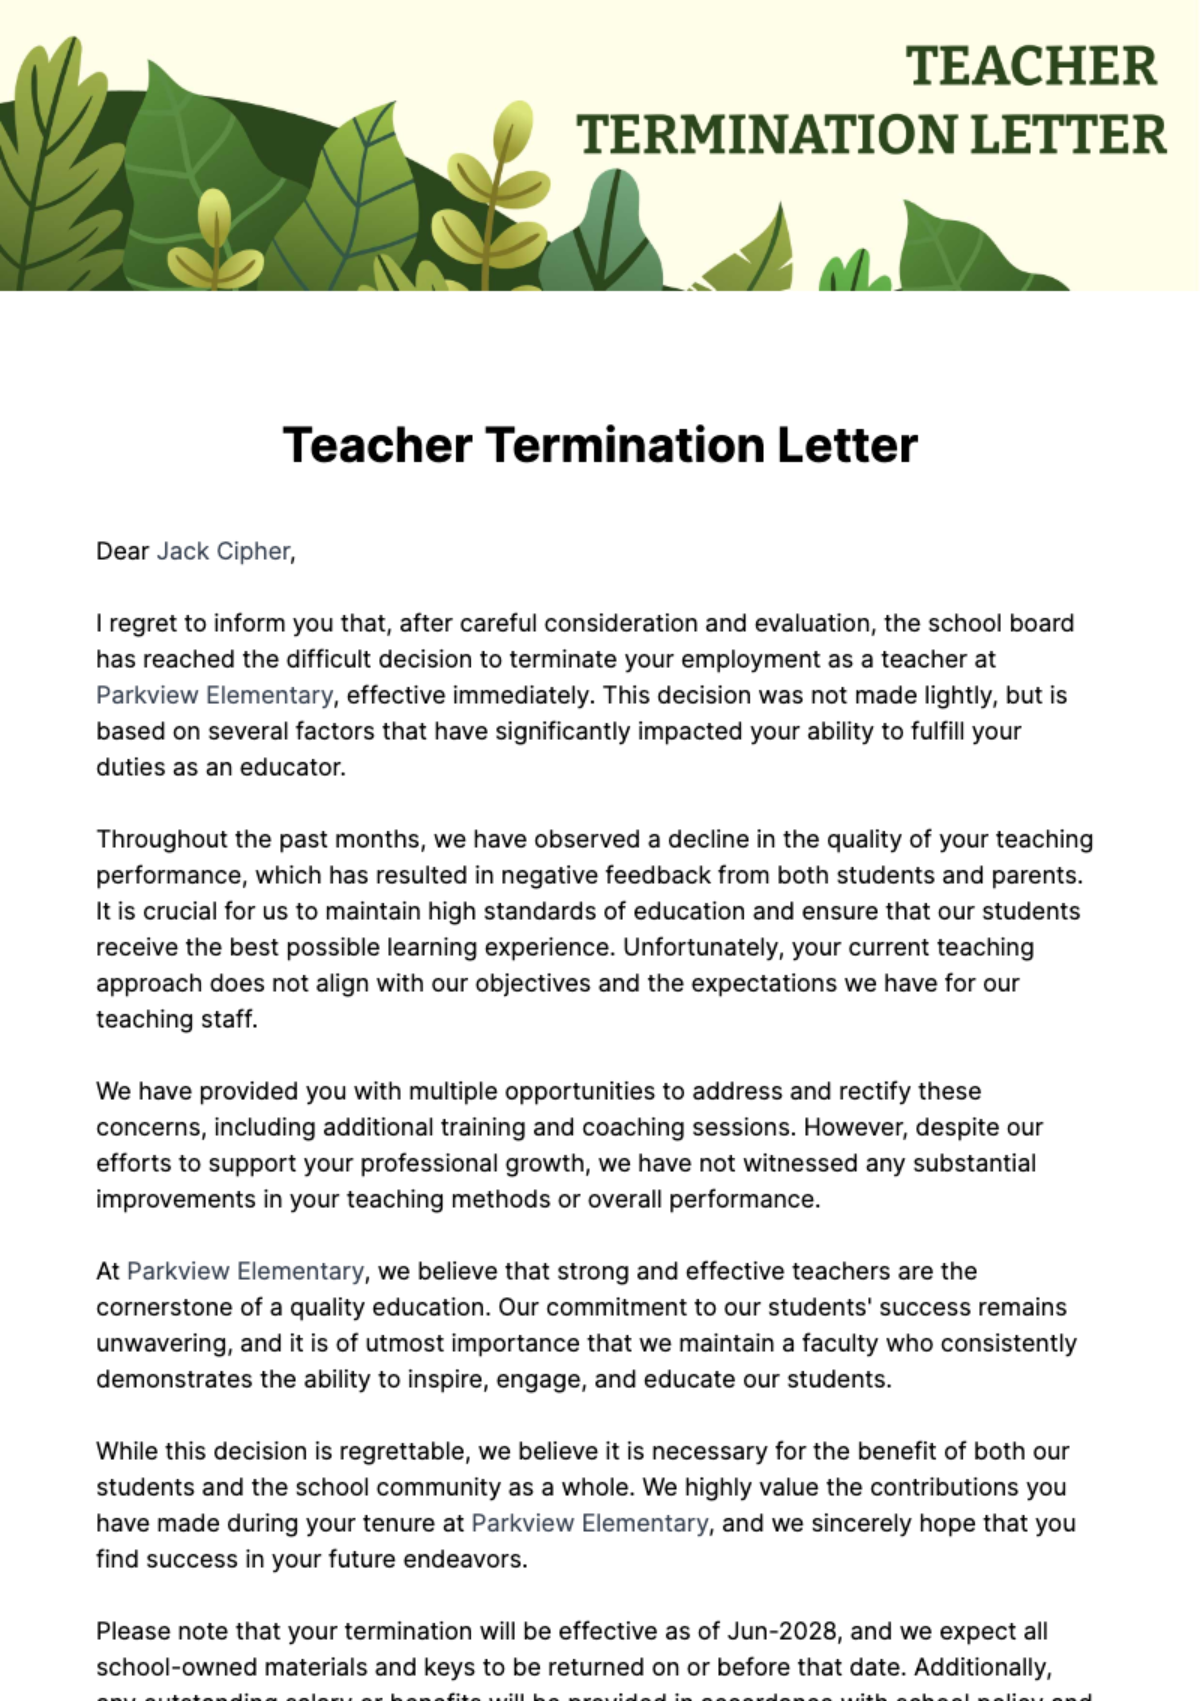 Free Teacher Termination Letter Template